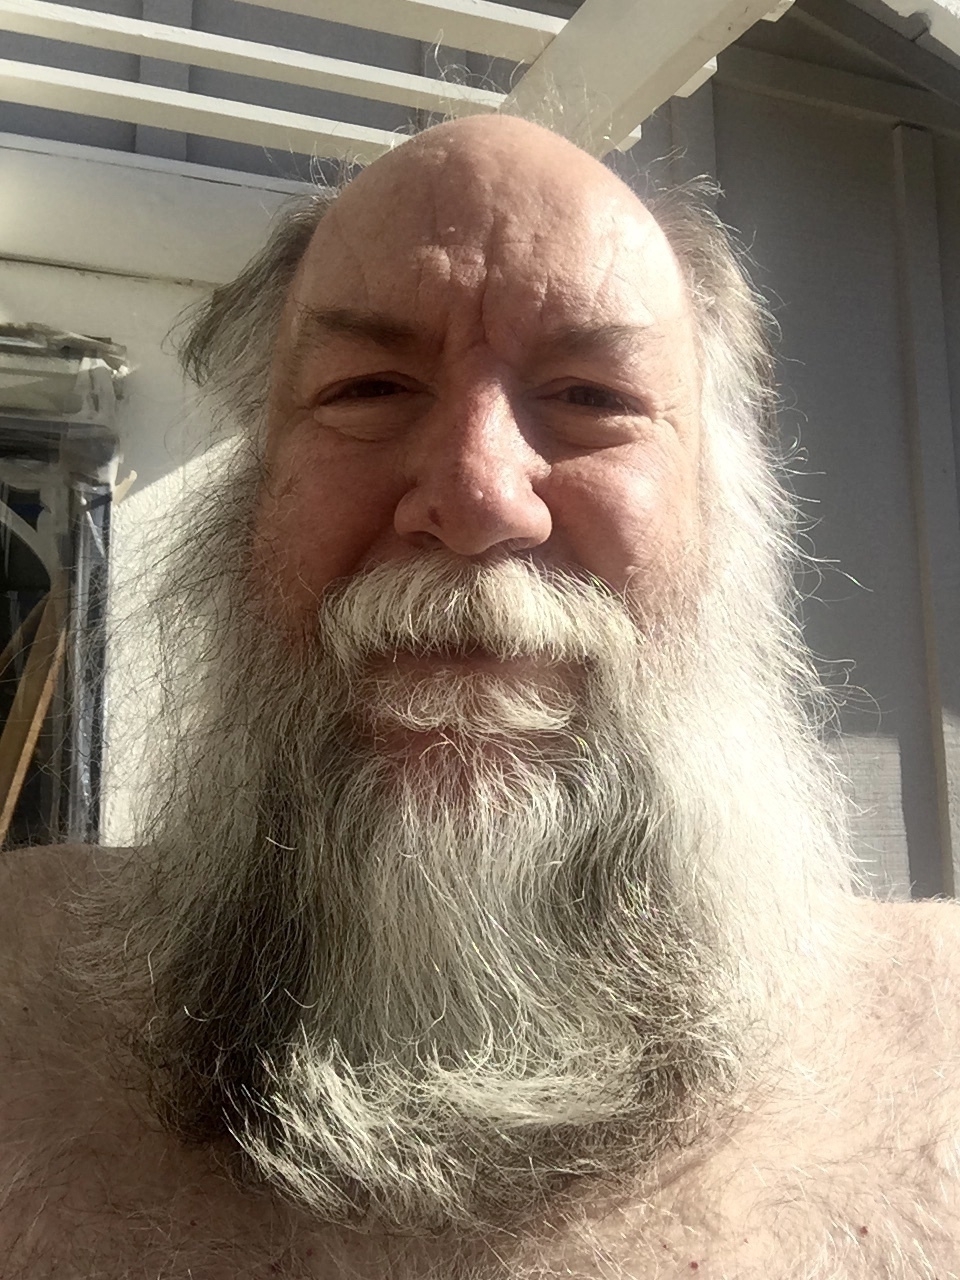 Self portrait with long beard and hair.